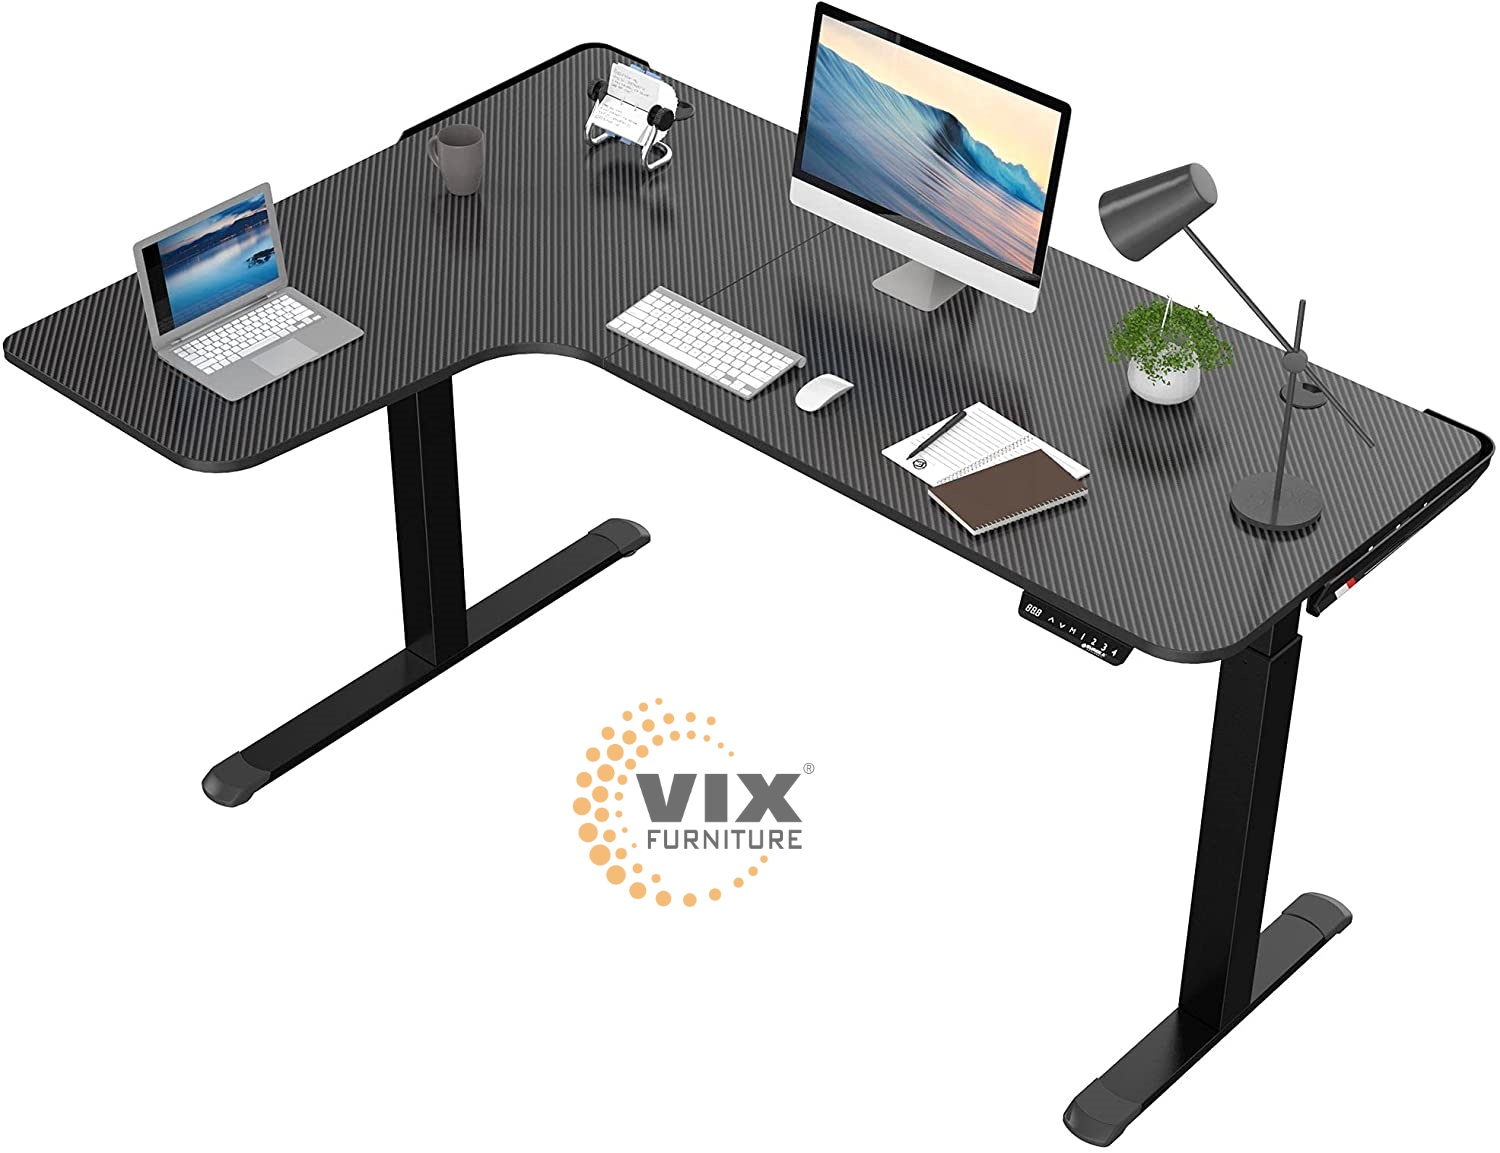 Vix Furniture - A reputable unit specializing in office furniture